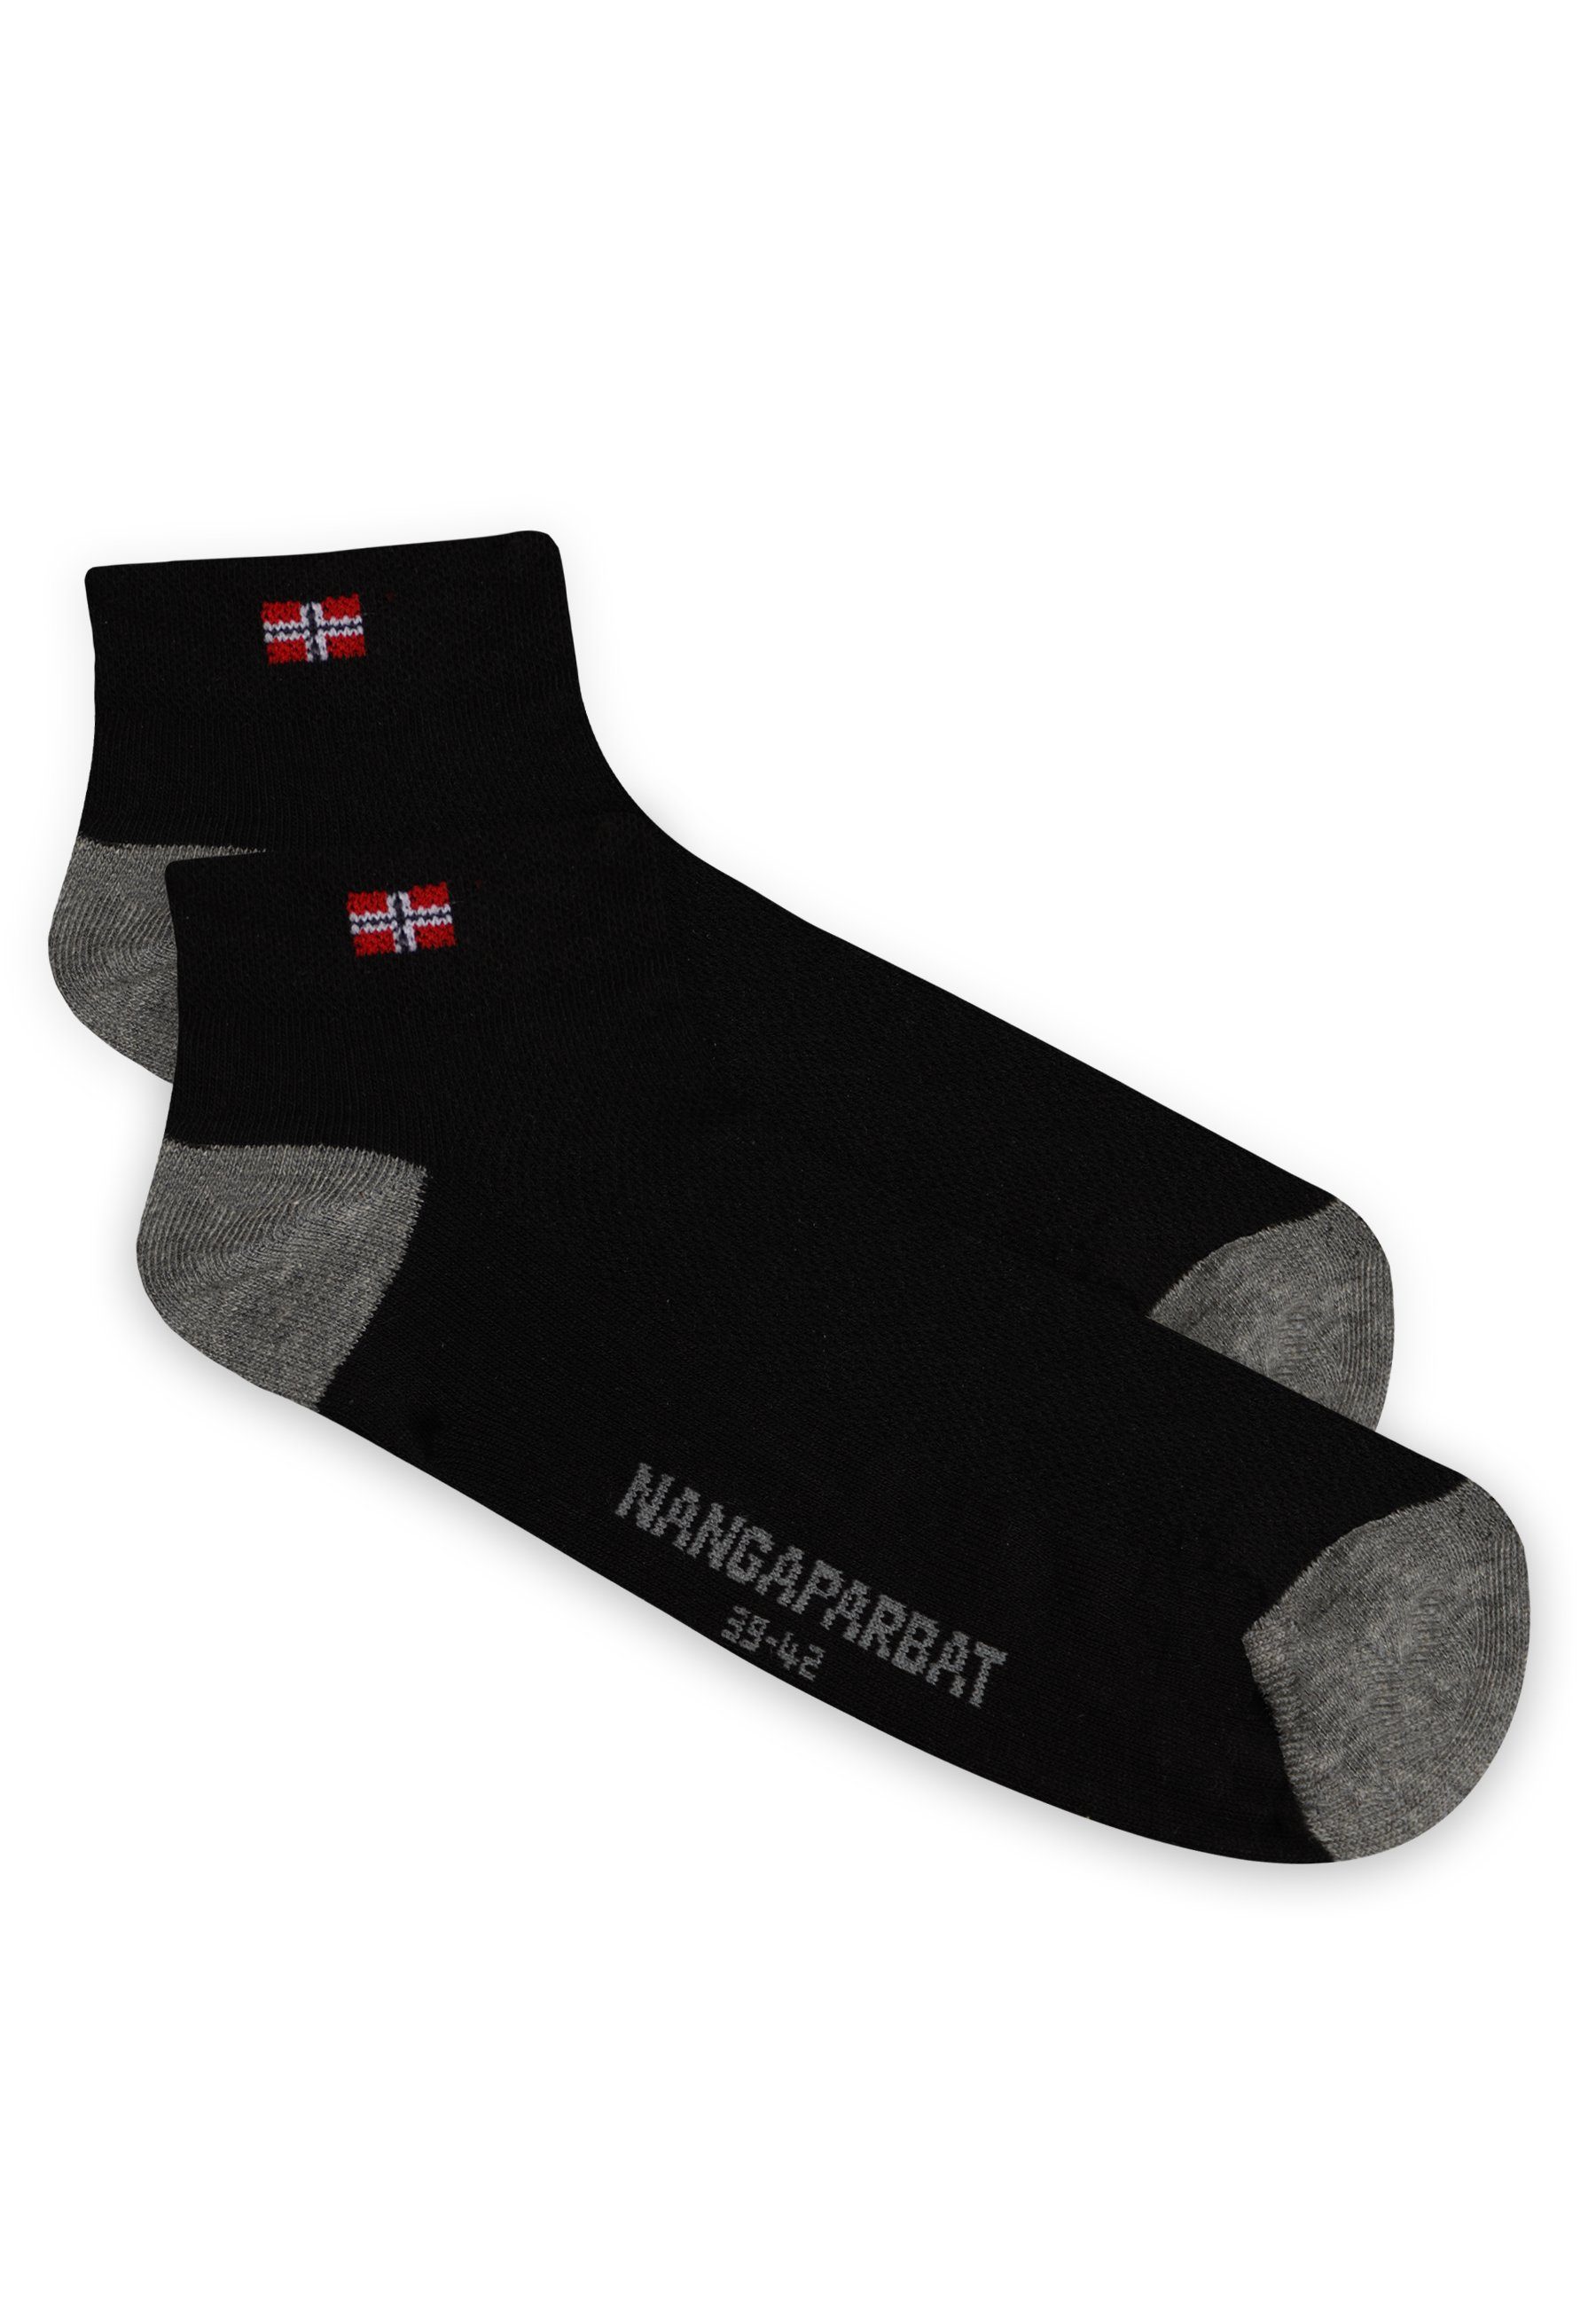 NANGAPARBAT Socken Trittdämpfung komfortabler schwarz mit